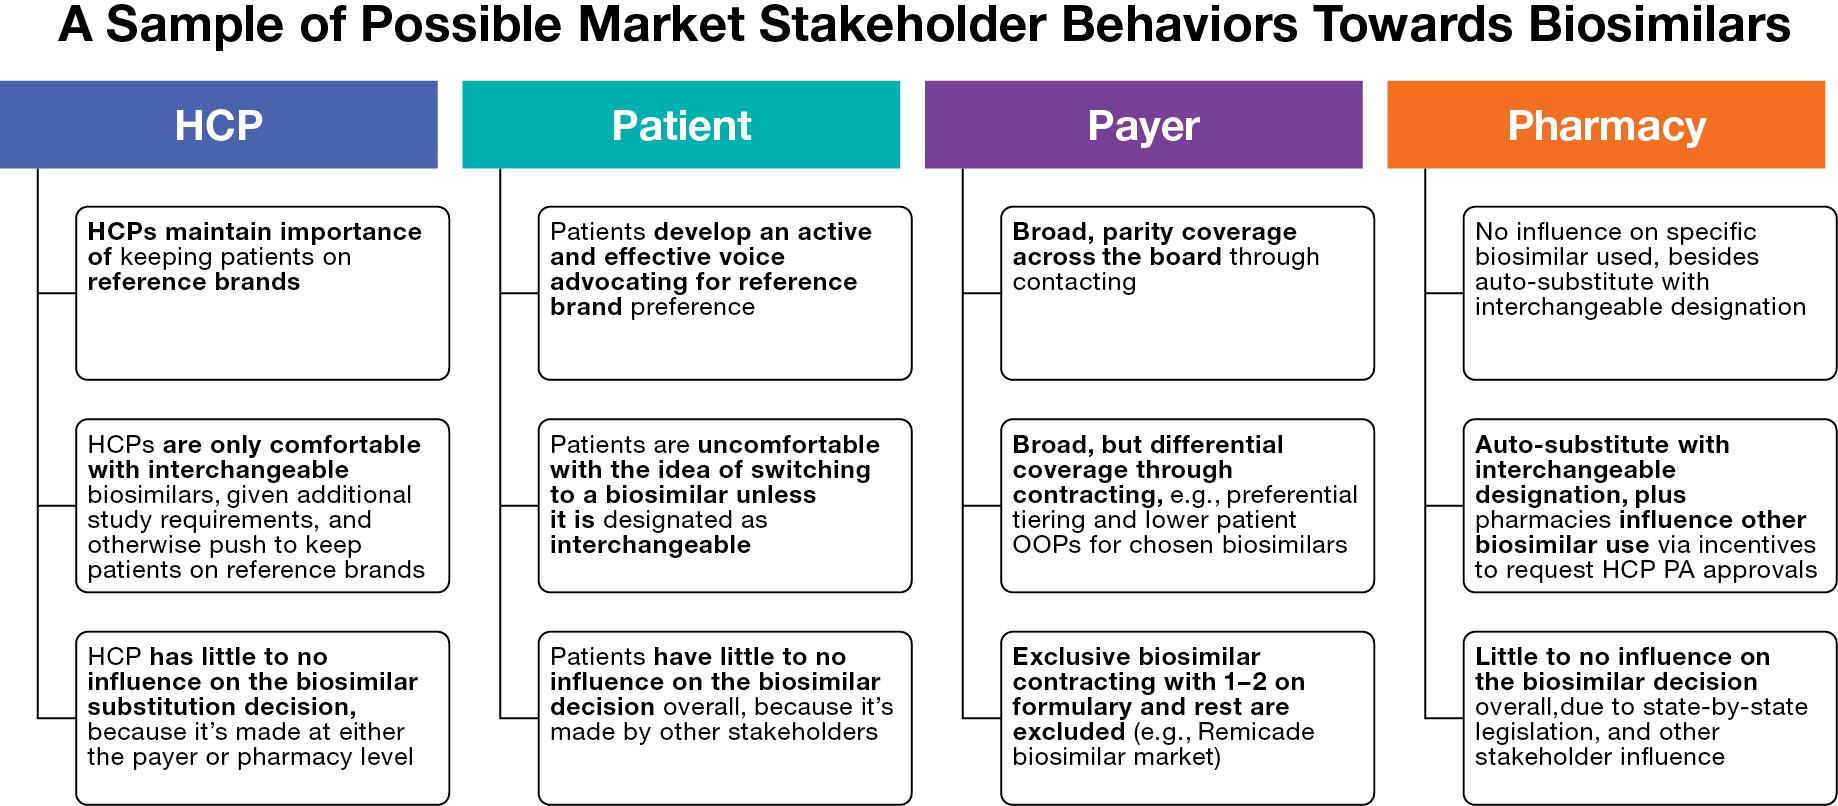 A sample of possible market stateholder behaviors towards biosimilars